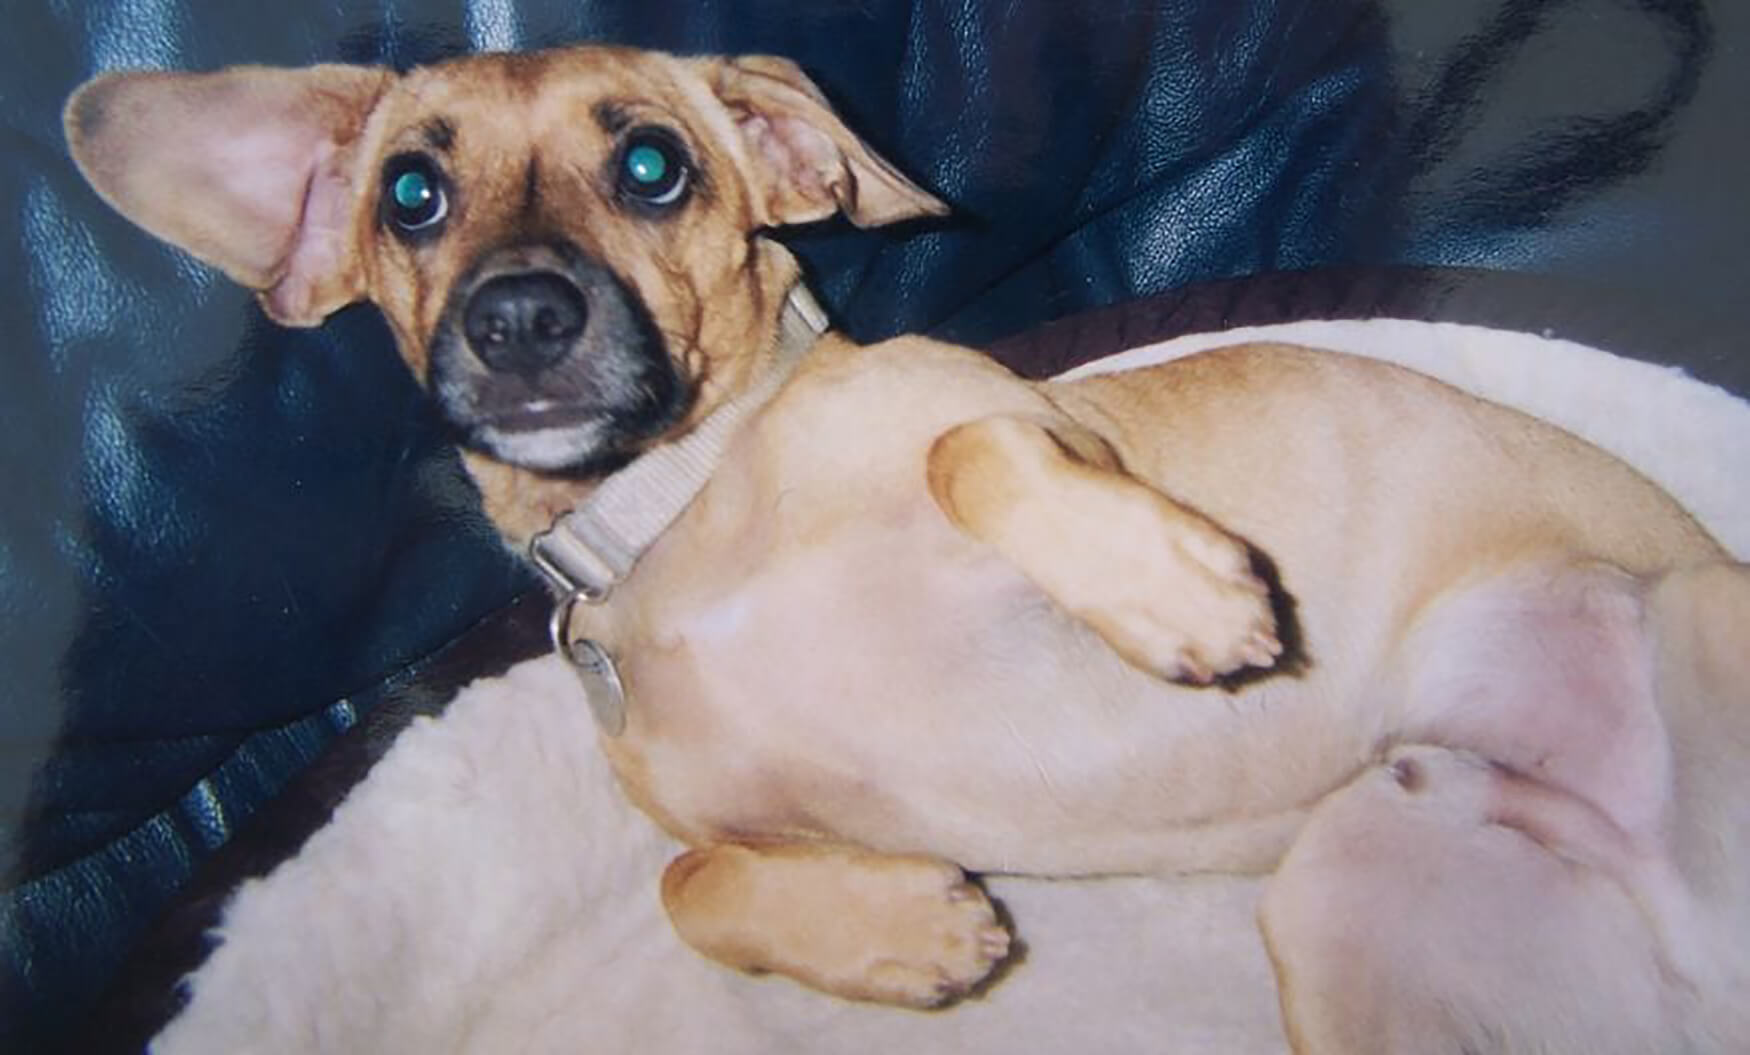 Yogi, a small dog lies on a blanket